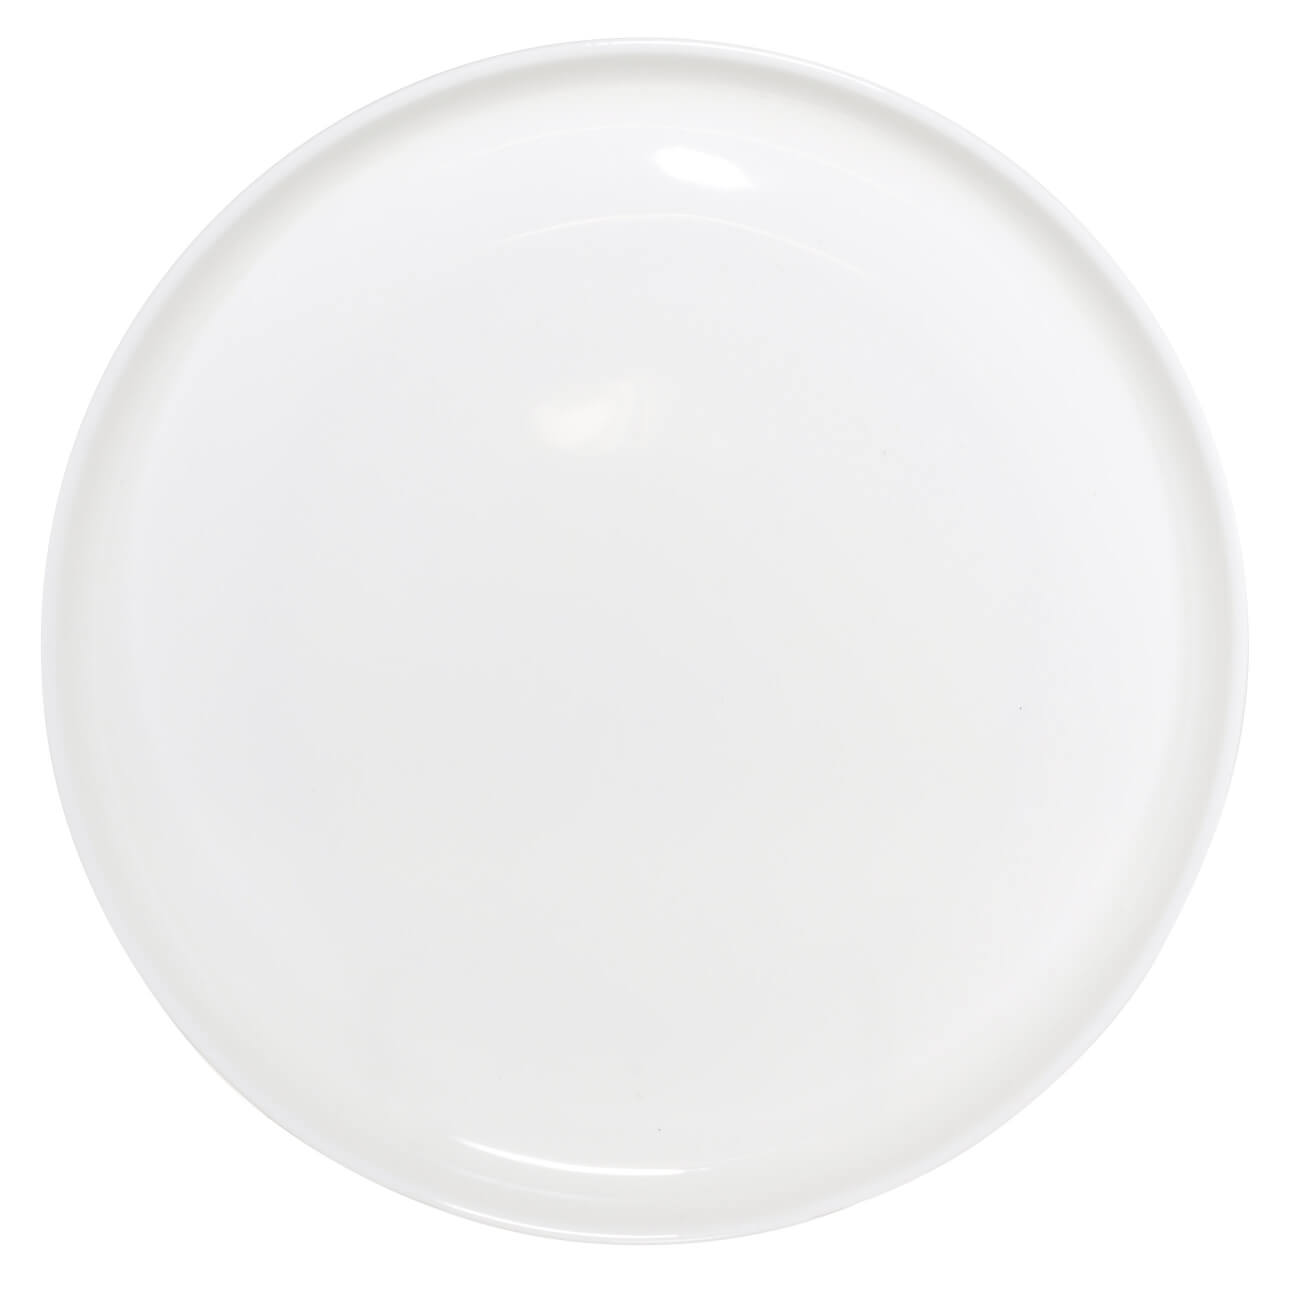 Тарелка обеденная, 26 см, фарфор F, белая, Ideal white тарелка обеденная фарфор 27 см круглая dynasty fioretta tdp081 tdp081 1